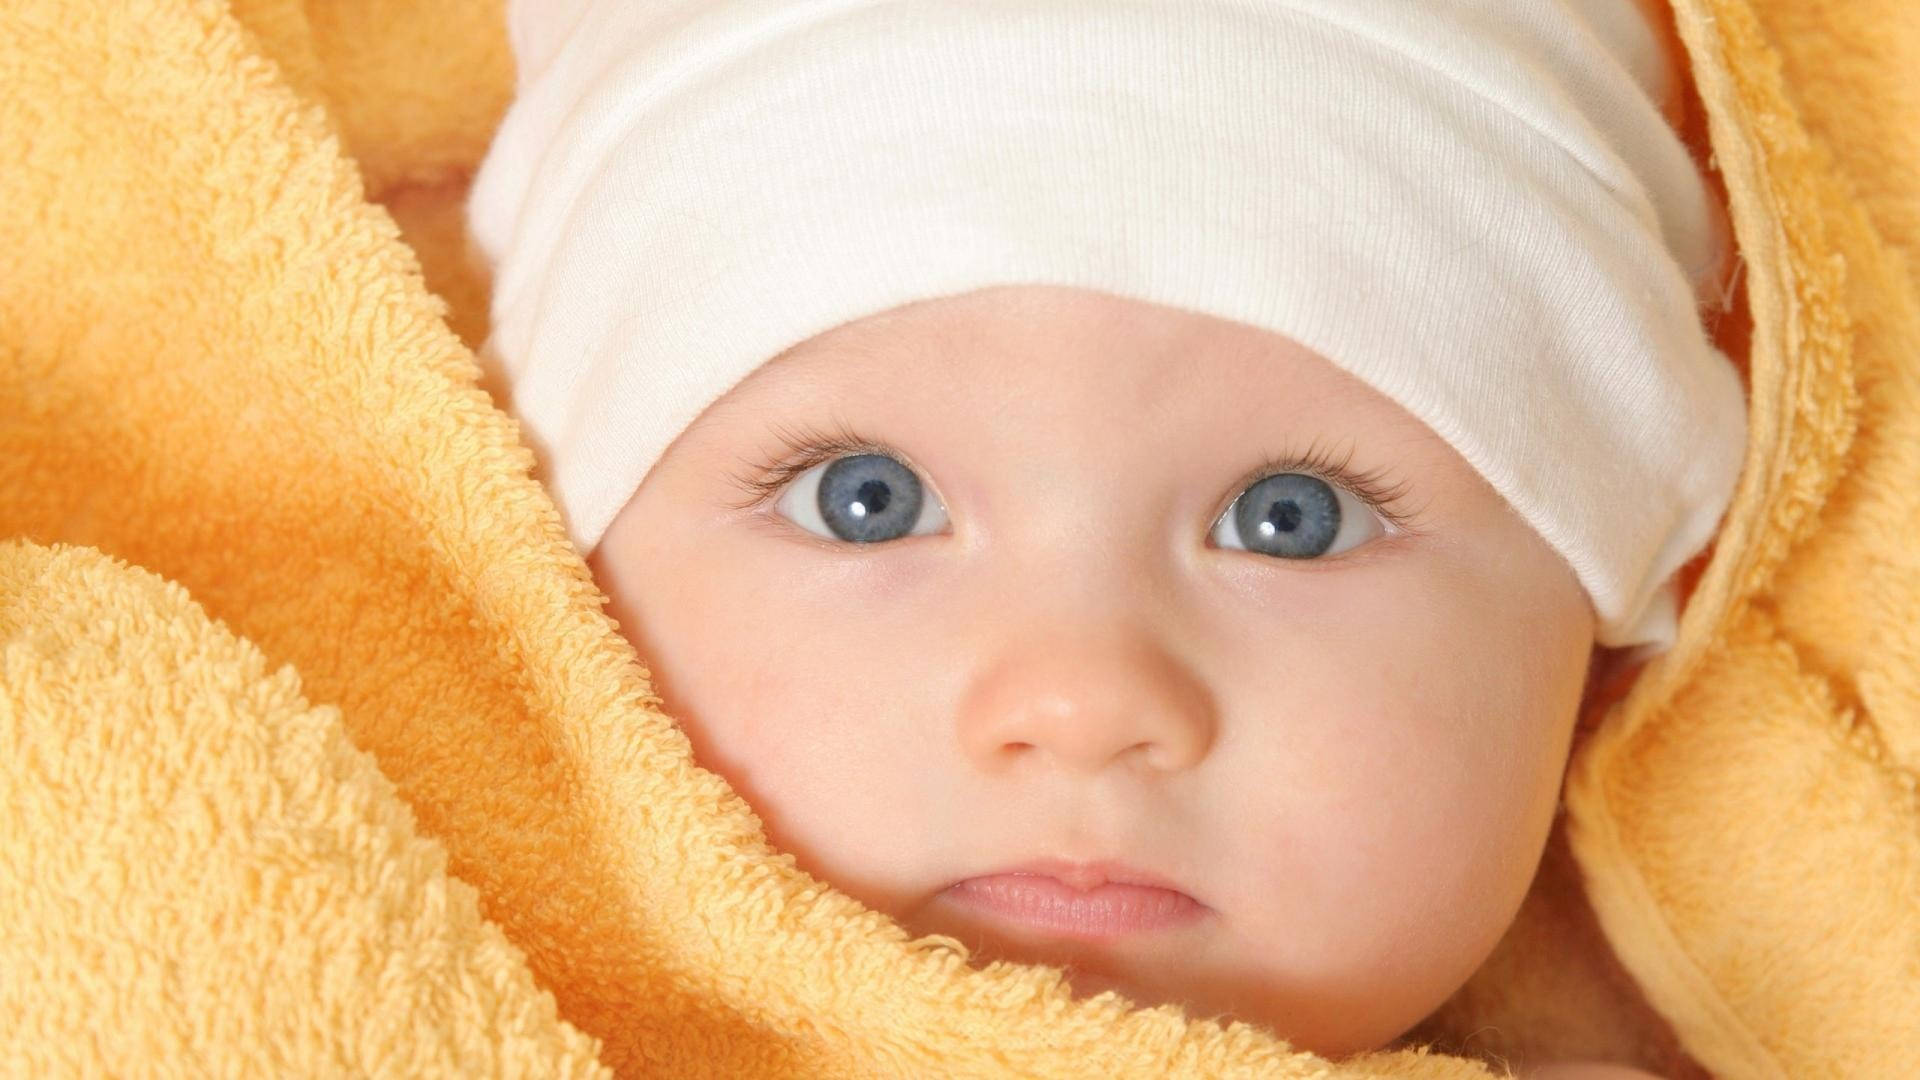 Baby Boy Indpakket I Gul Håndklæde Wallpaper